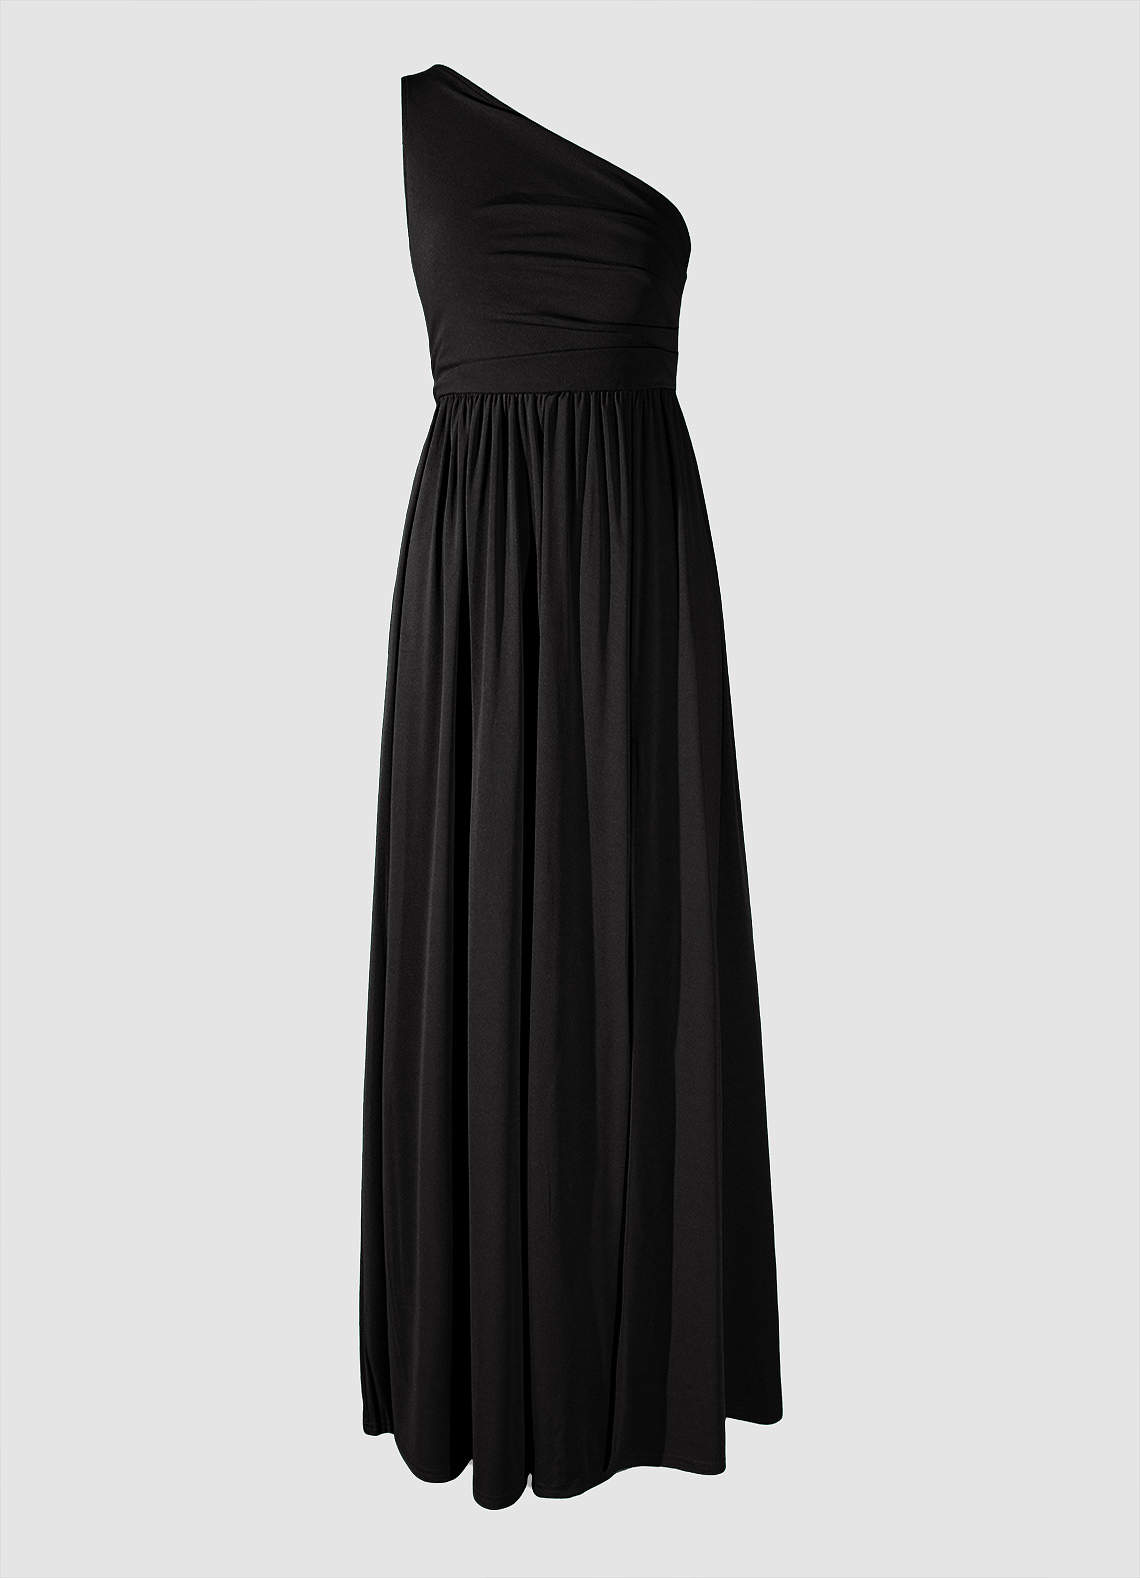 On The Guest List Black One-Shoulder Maxi Dress image1